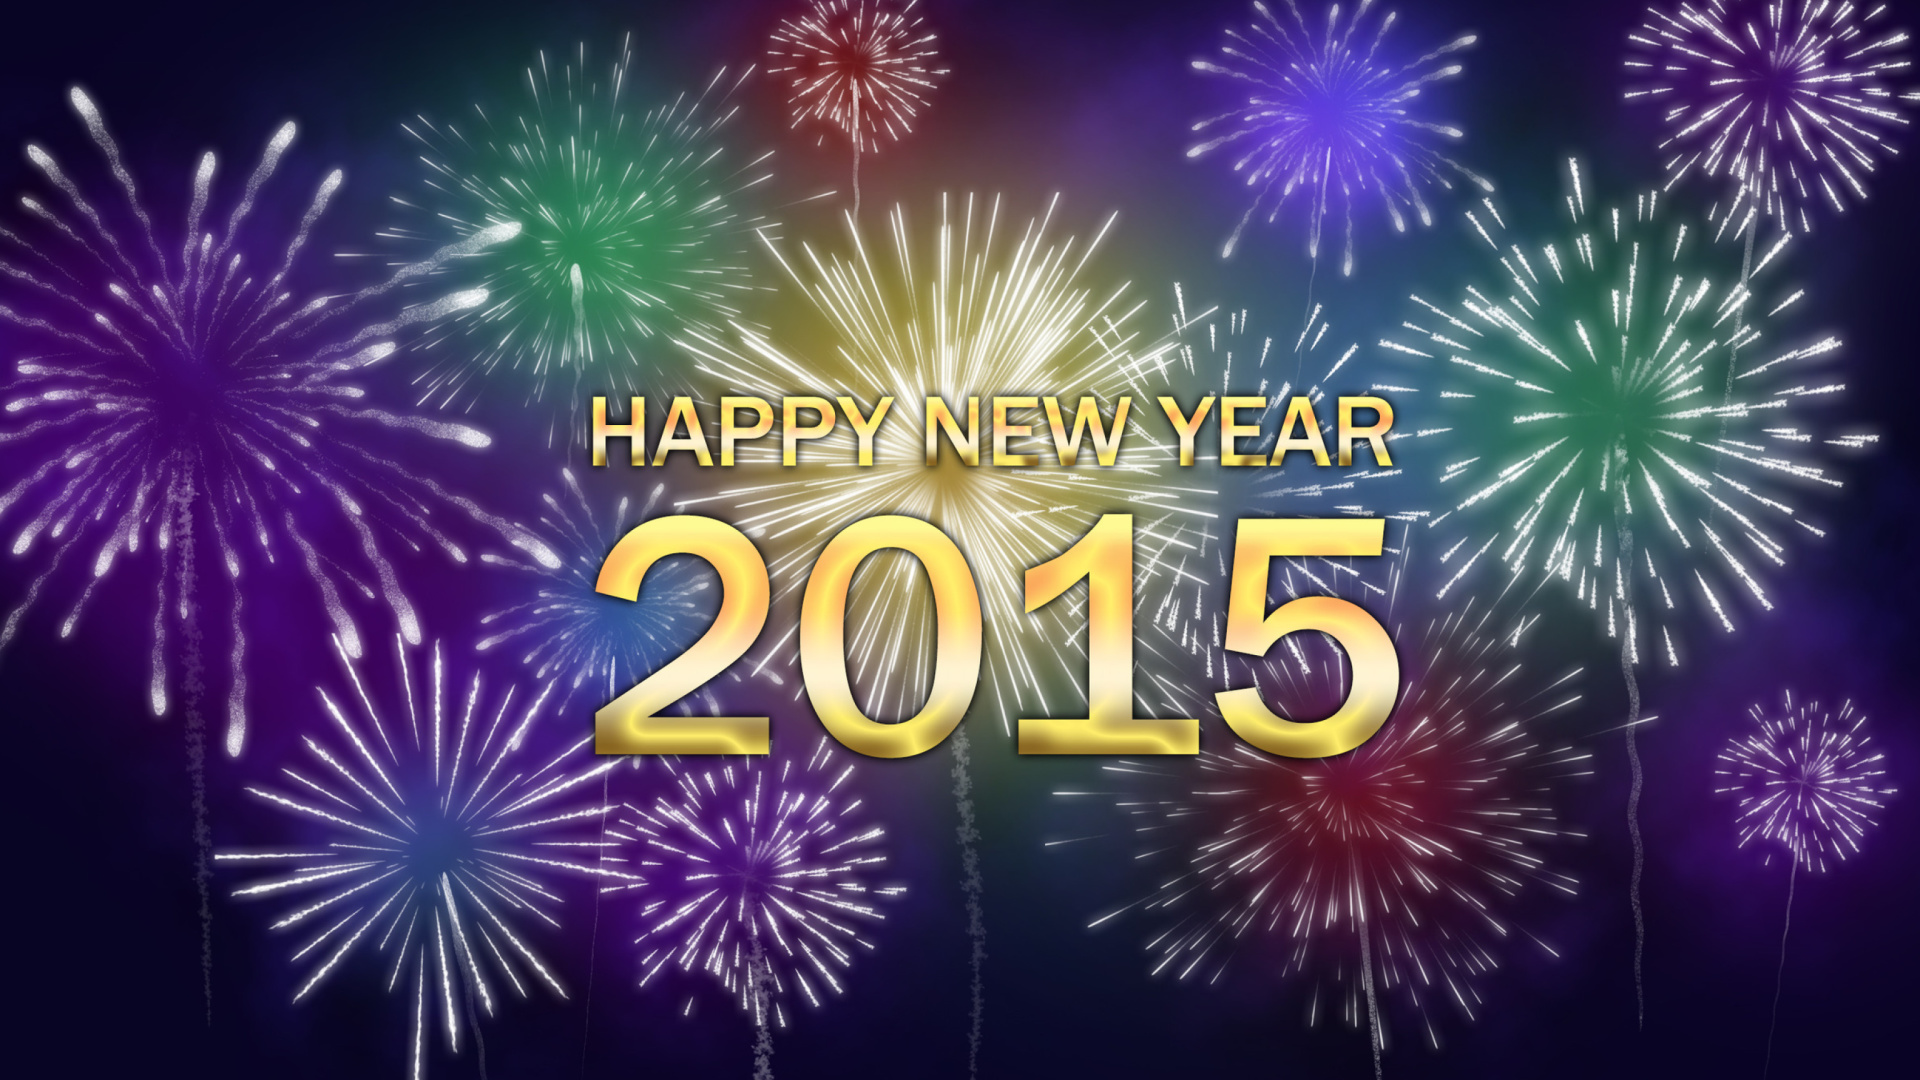 New Year Fireworks 2015 - Fondos de pantalla gratis para escritorio ... New Years Fireworks Wallpaper 2015